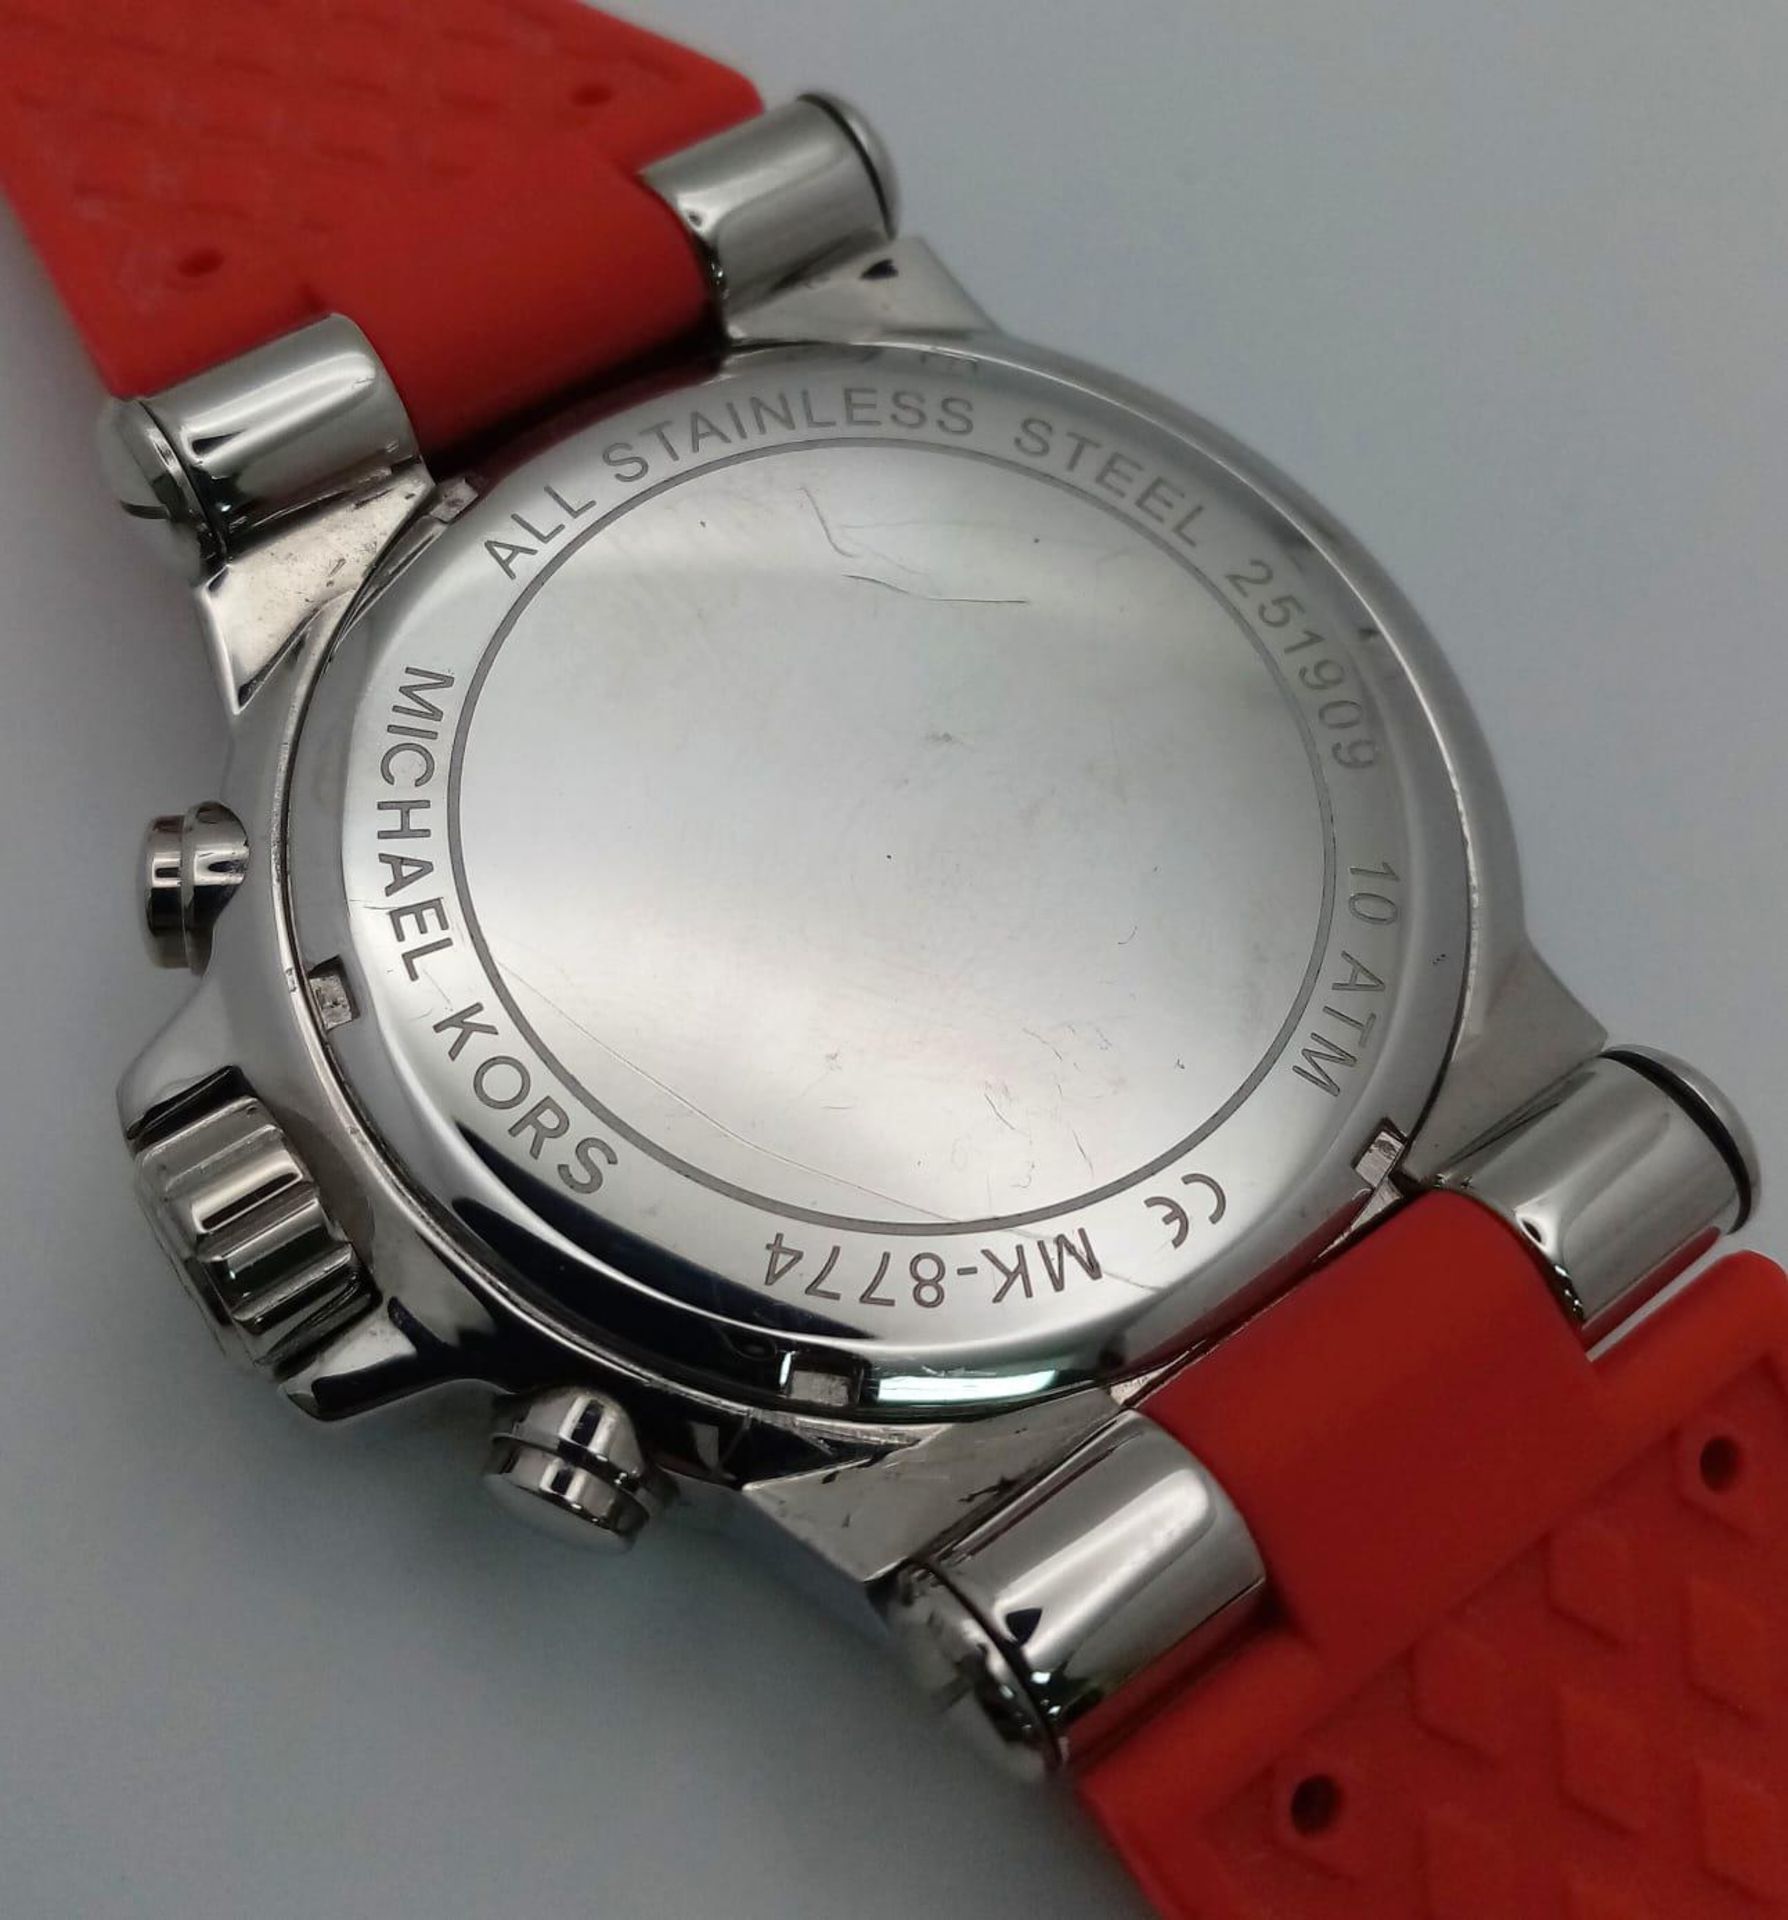 A Designer Michael Kors Chronograph Gents Watch. Red rubber strap. Stainless steel case - 49mm. - Bild 3 aus 5